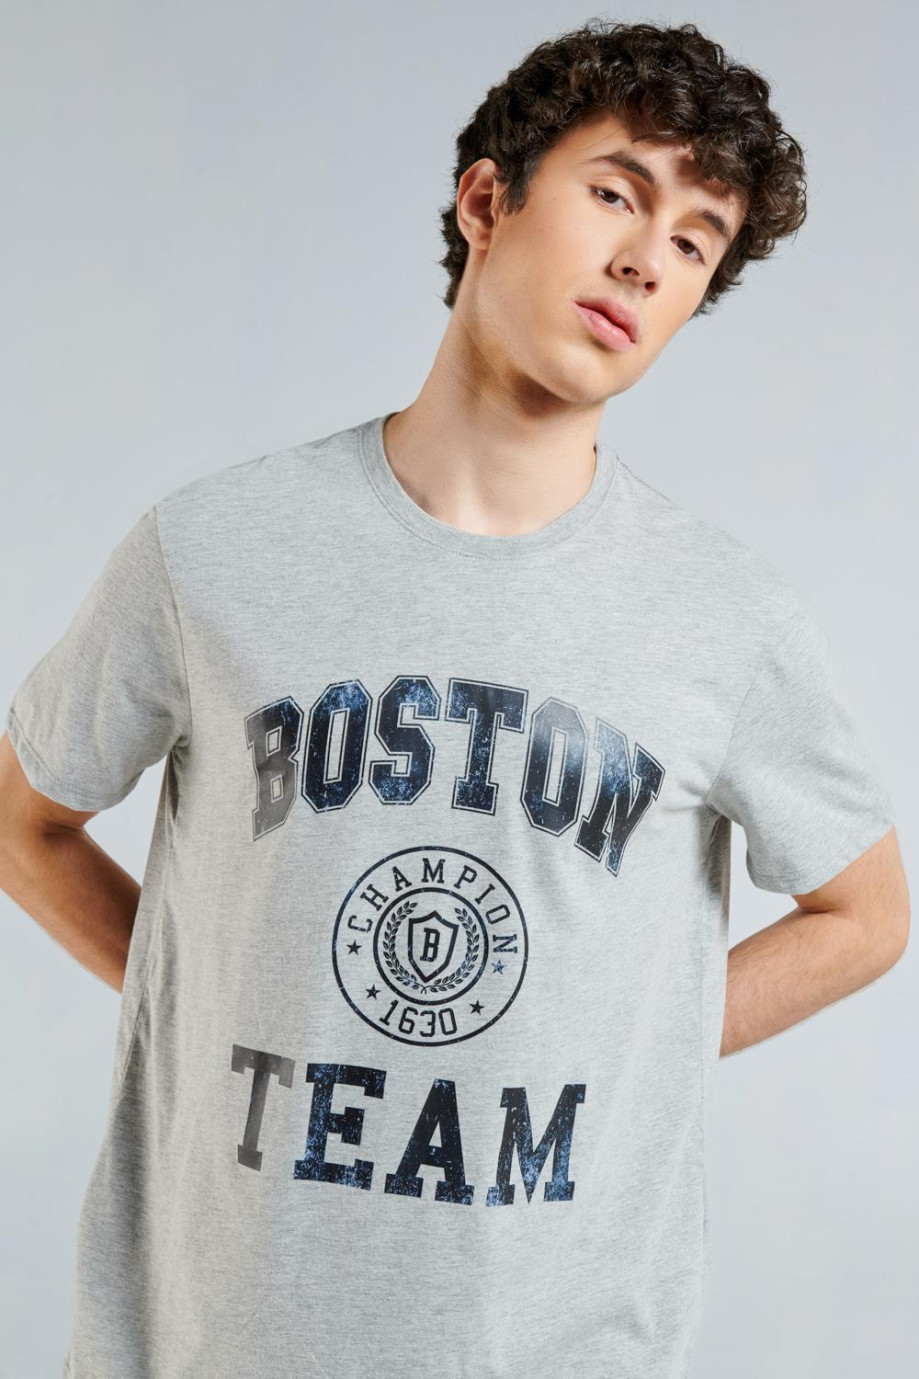 Camiseta unicolor con diseño college de Boston y manga corta